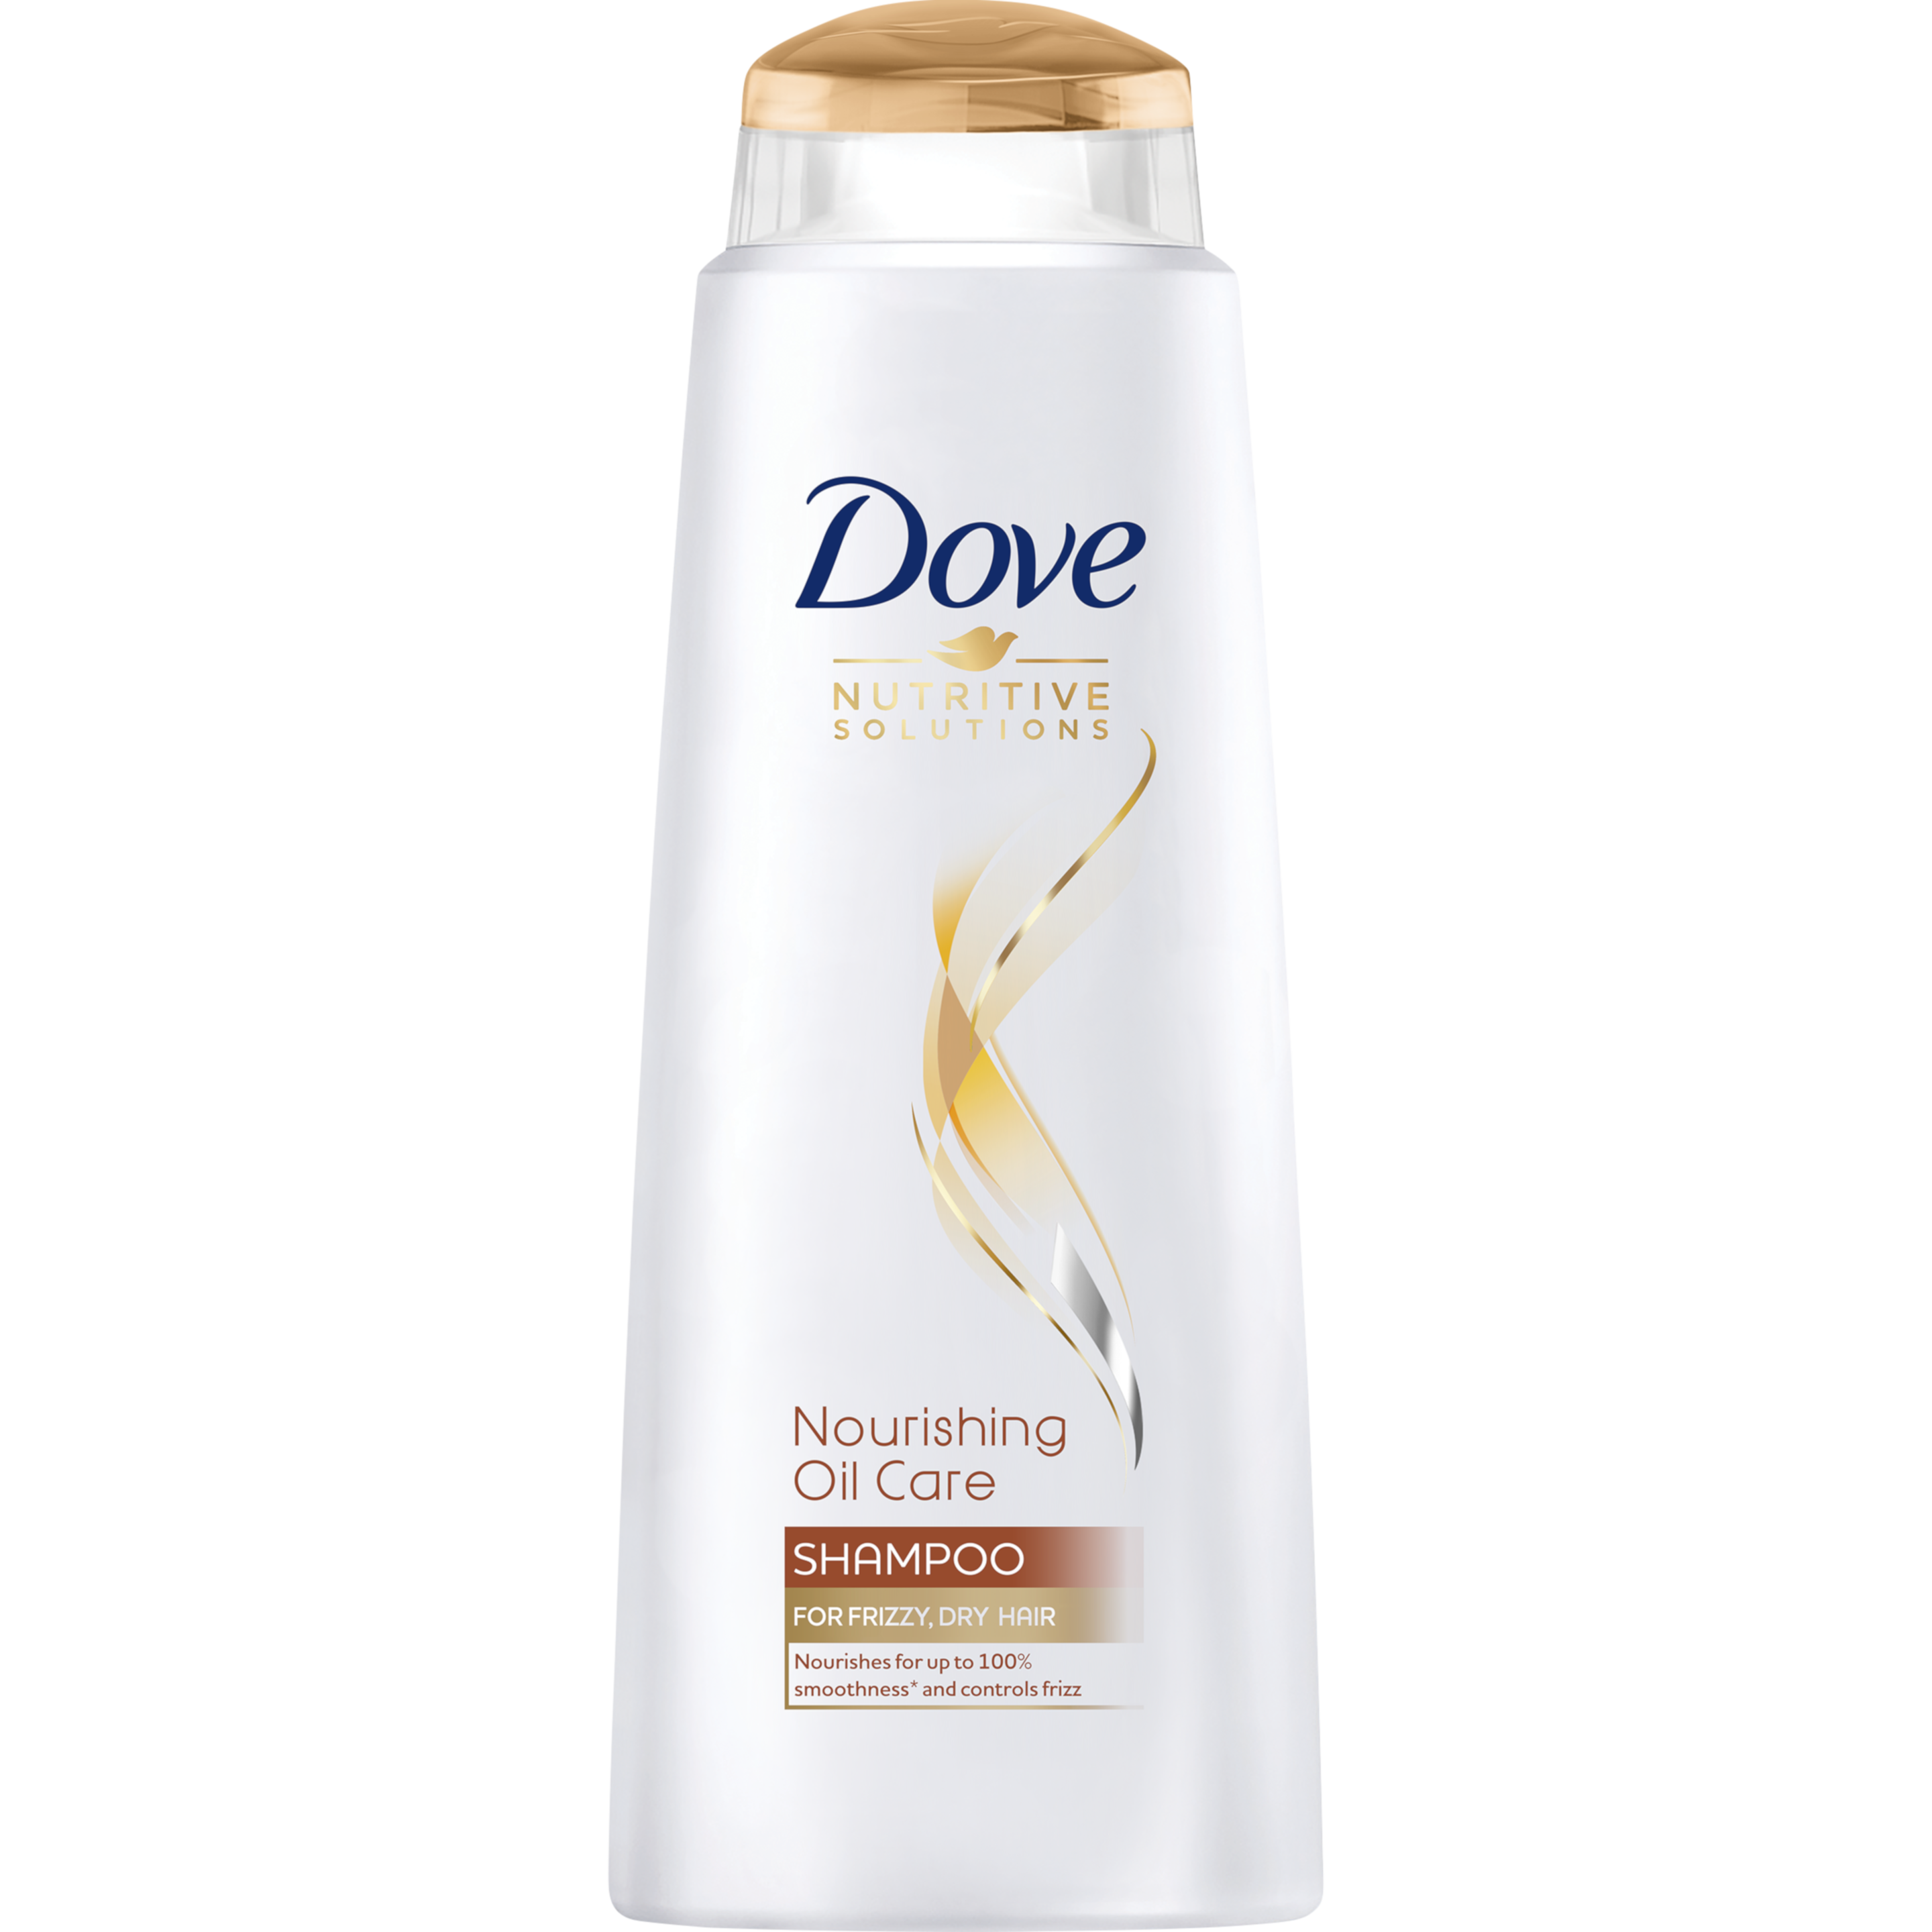 szampon dove oil opinie